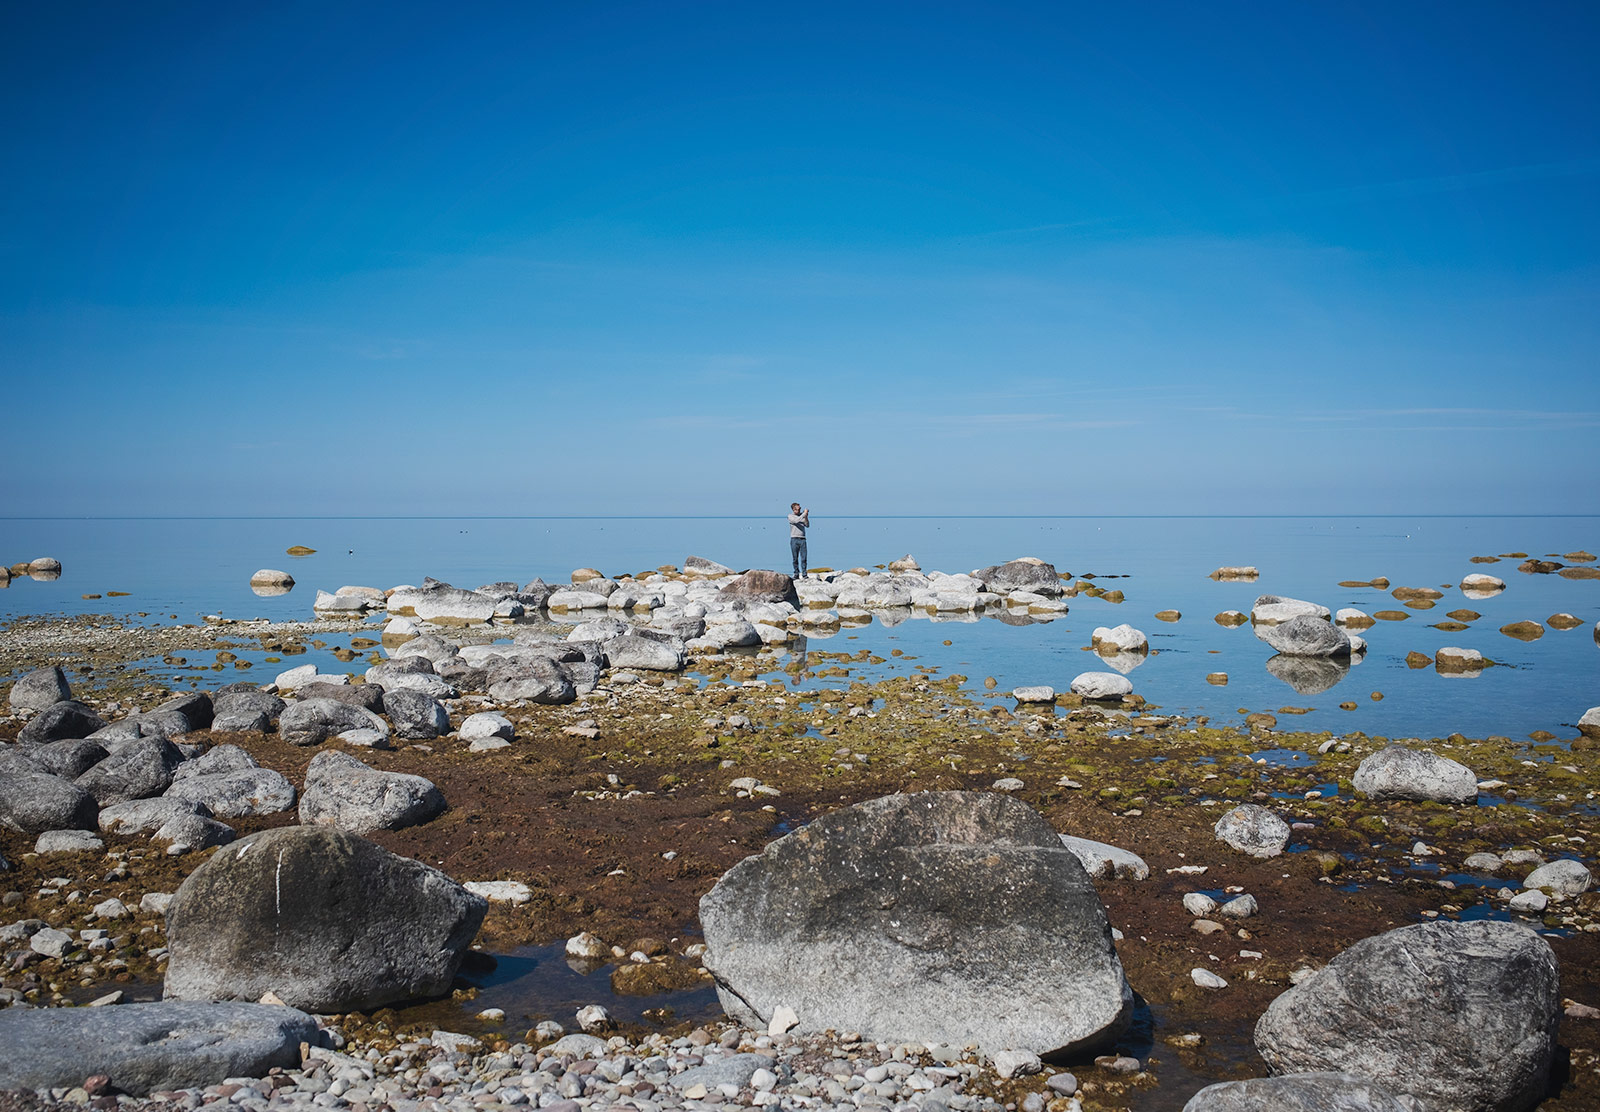 Man stood on rocks in the sea